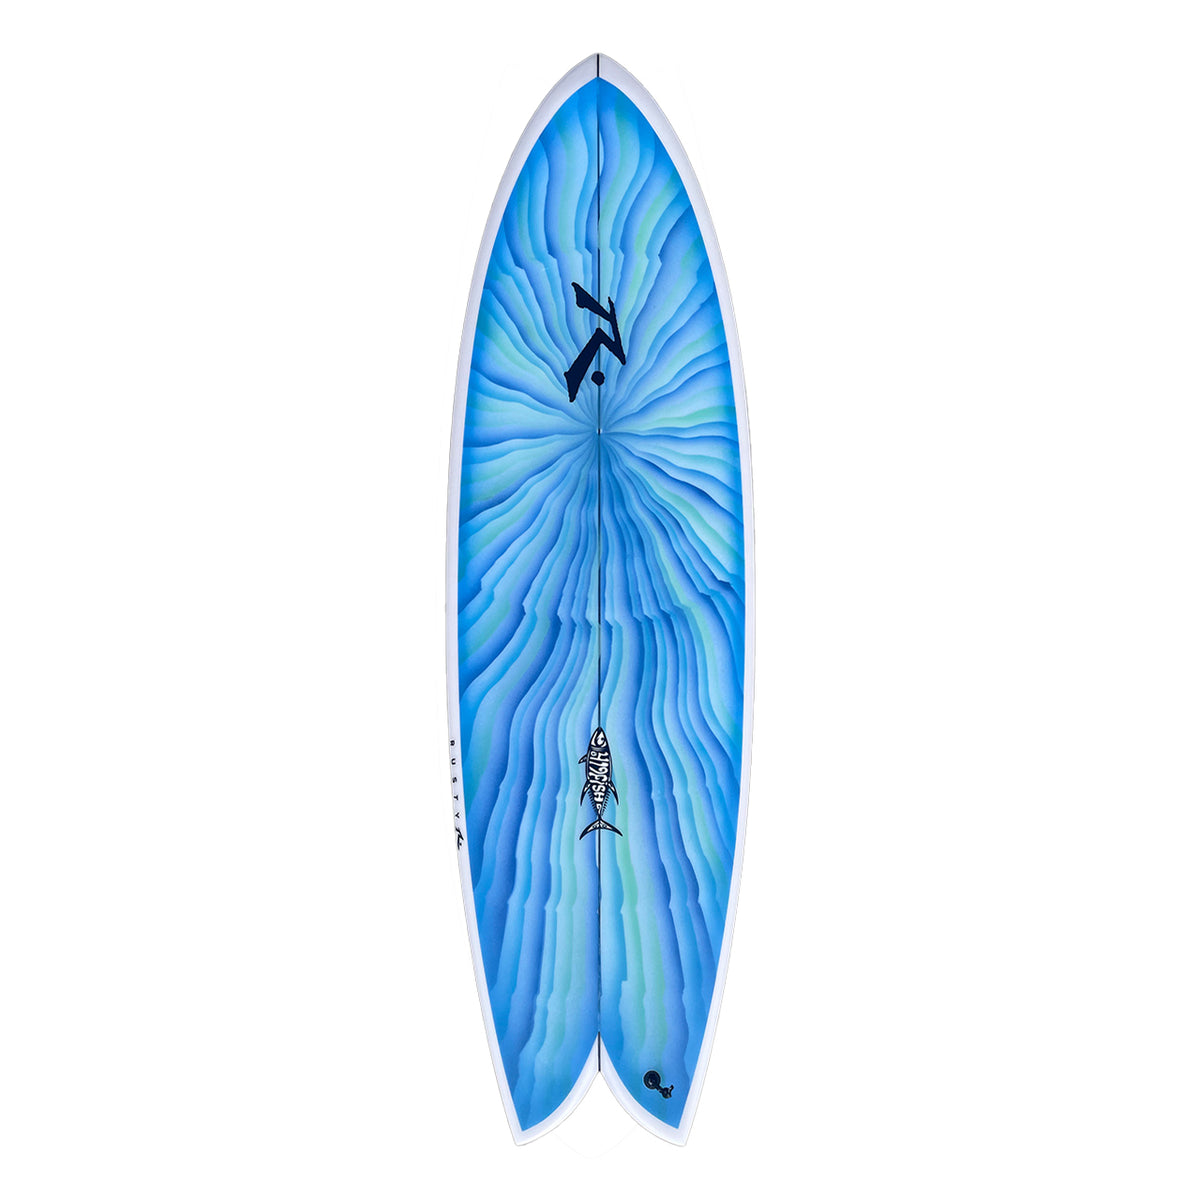 419fish - Alternative - Rusty Surfboards - Top View - Blue Starburst